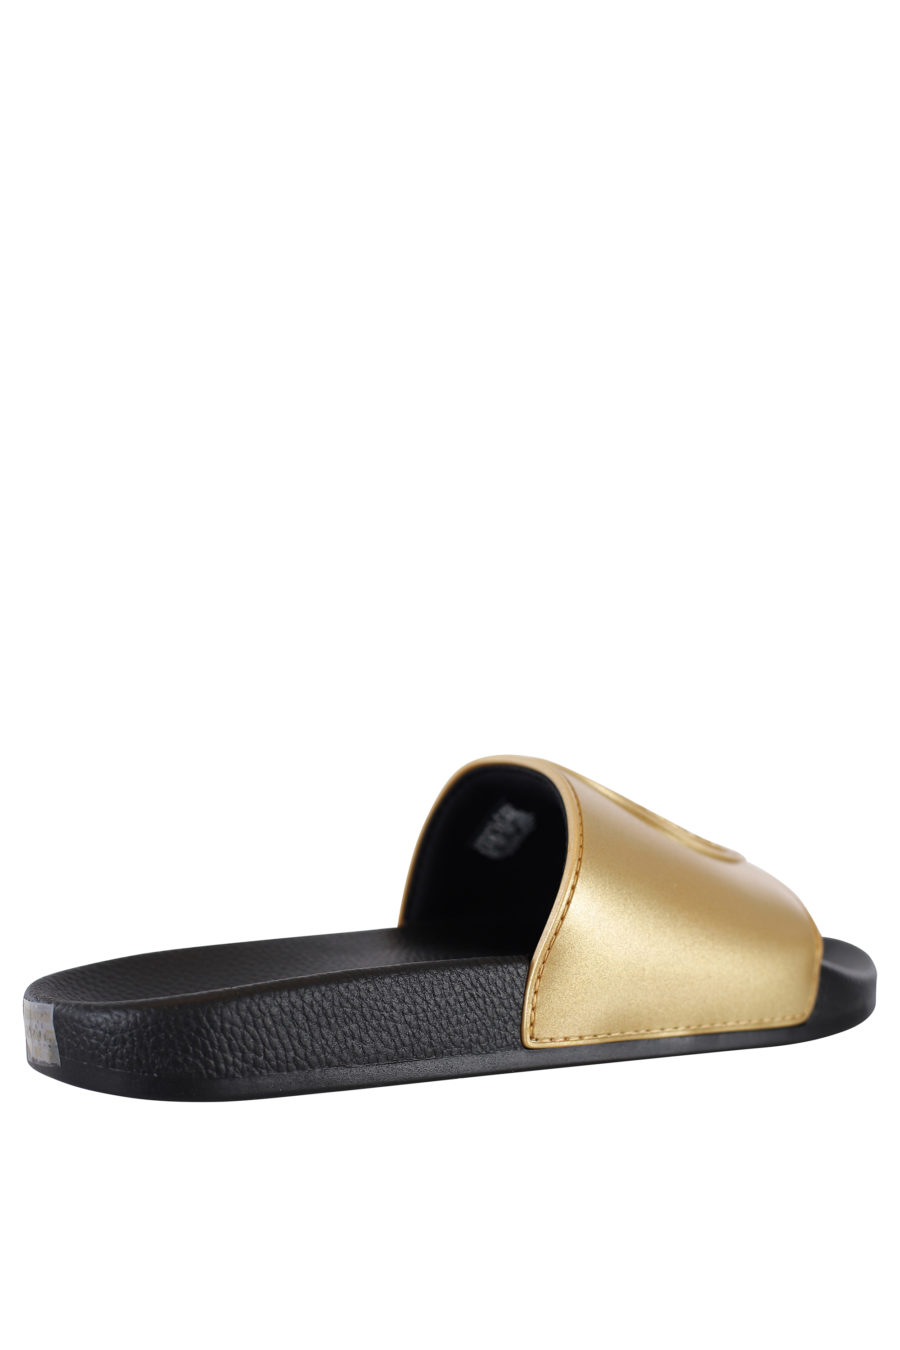 Gold and black flip-flops - IMG 2188 3